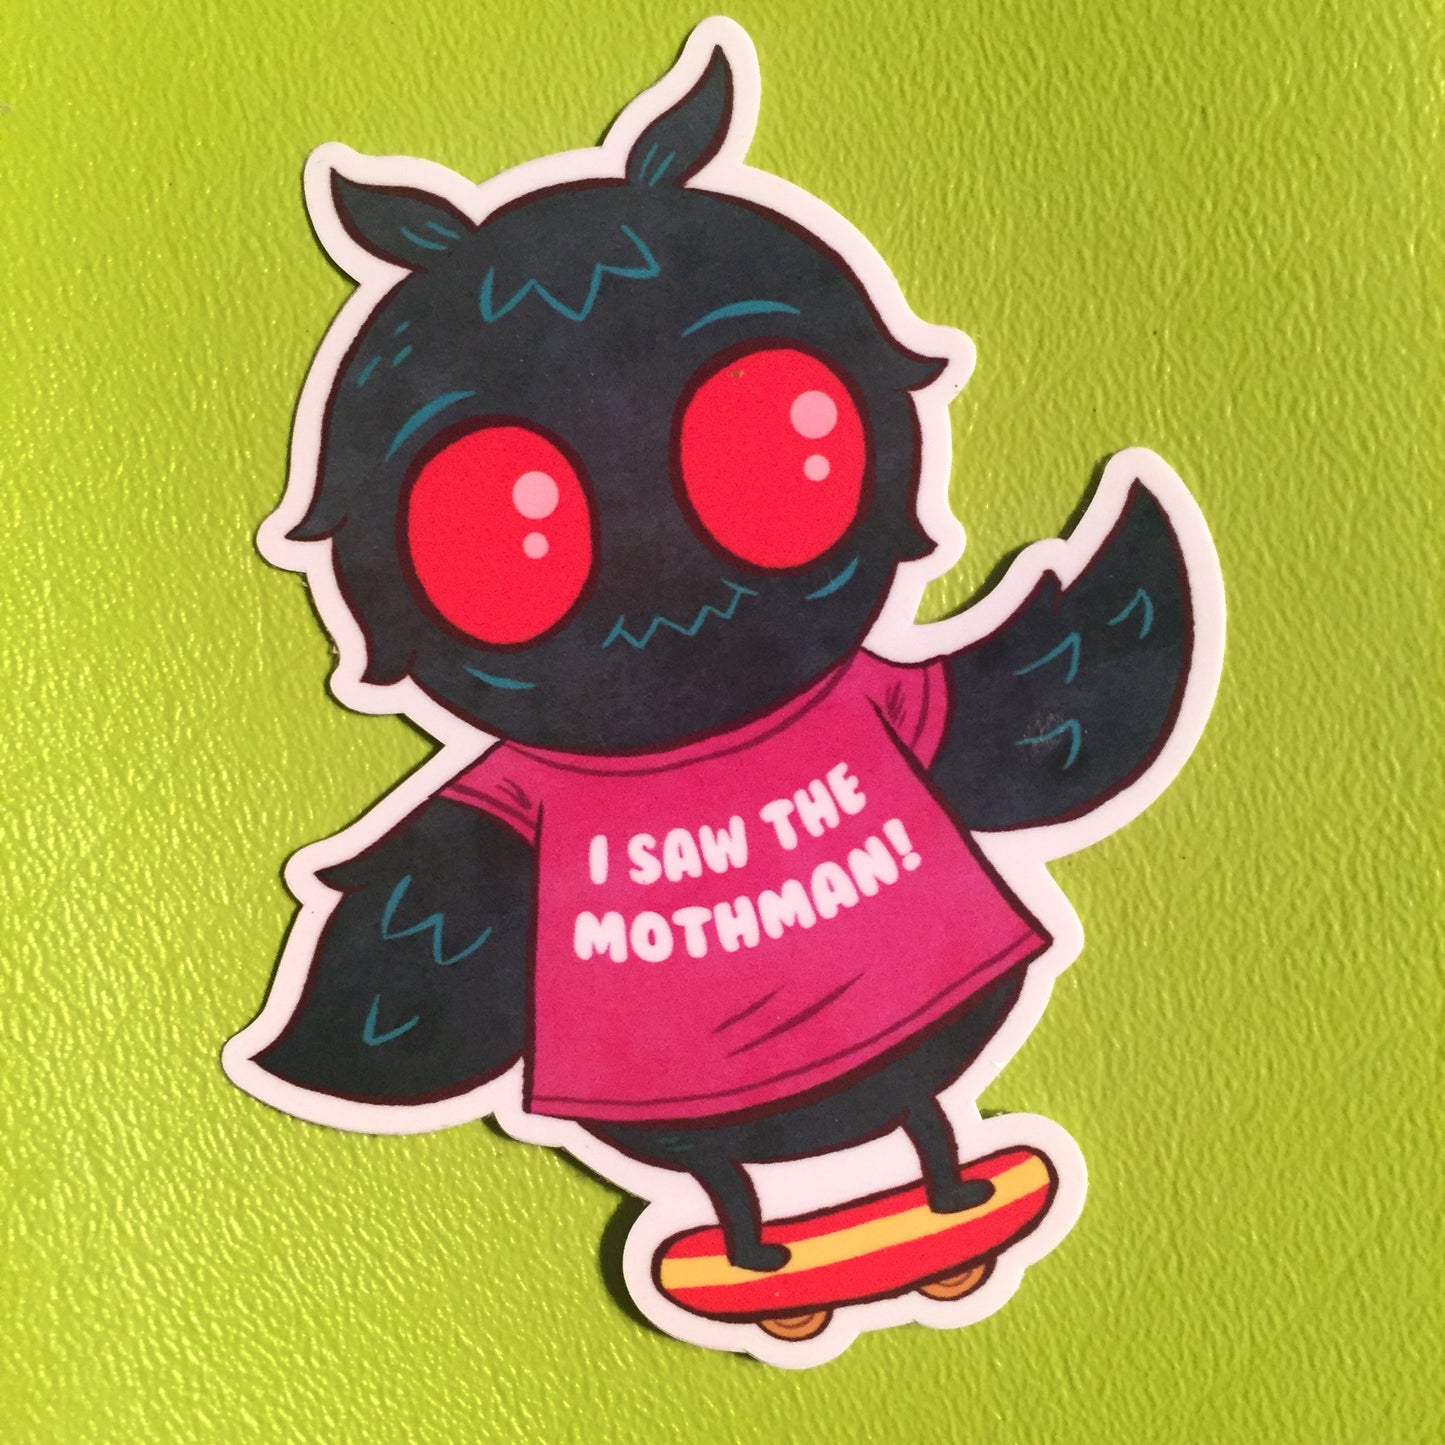 "Mothman" sticker